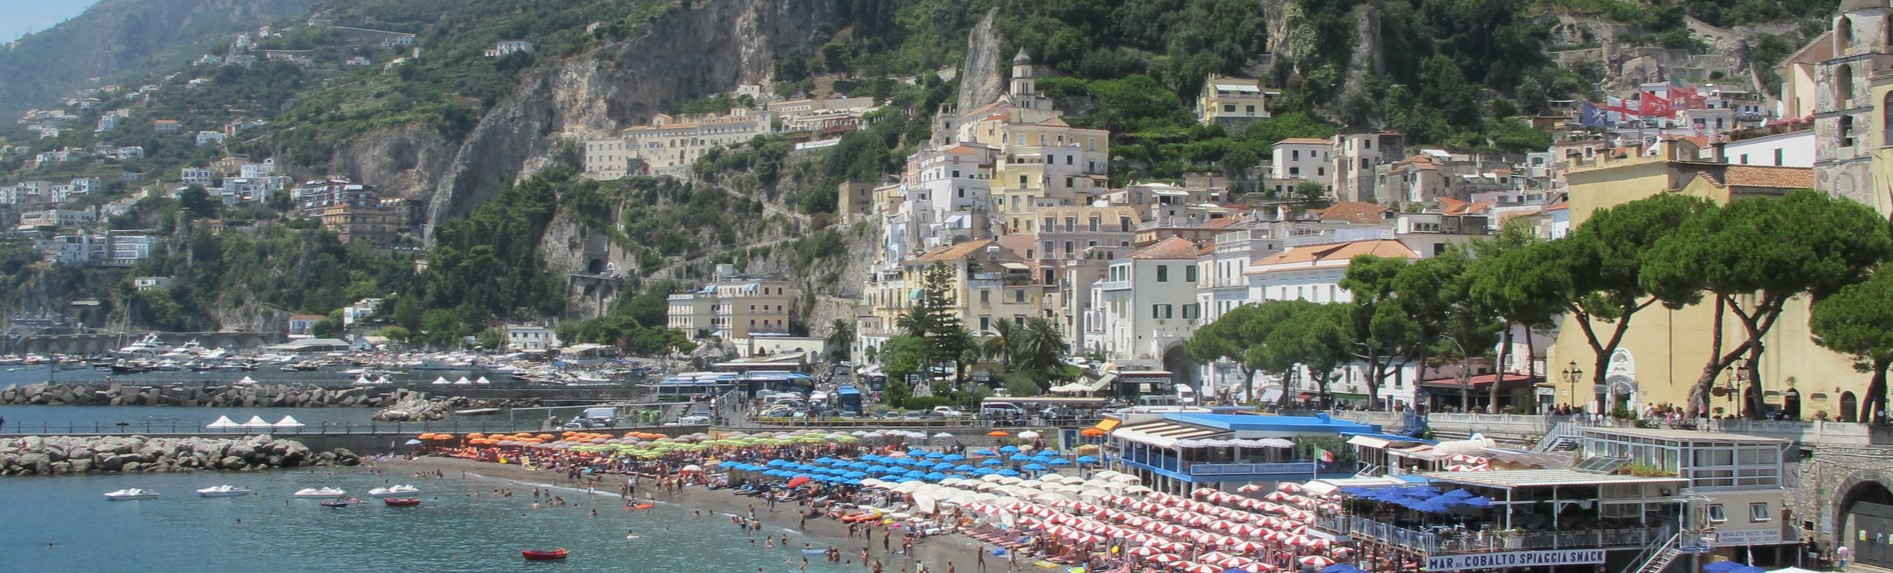 Amalfi Coast Tours are Available Now!